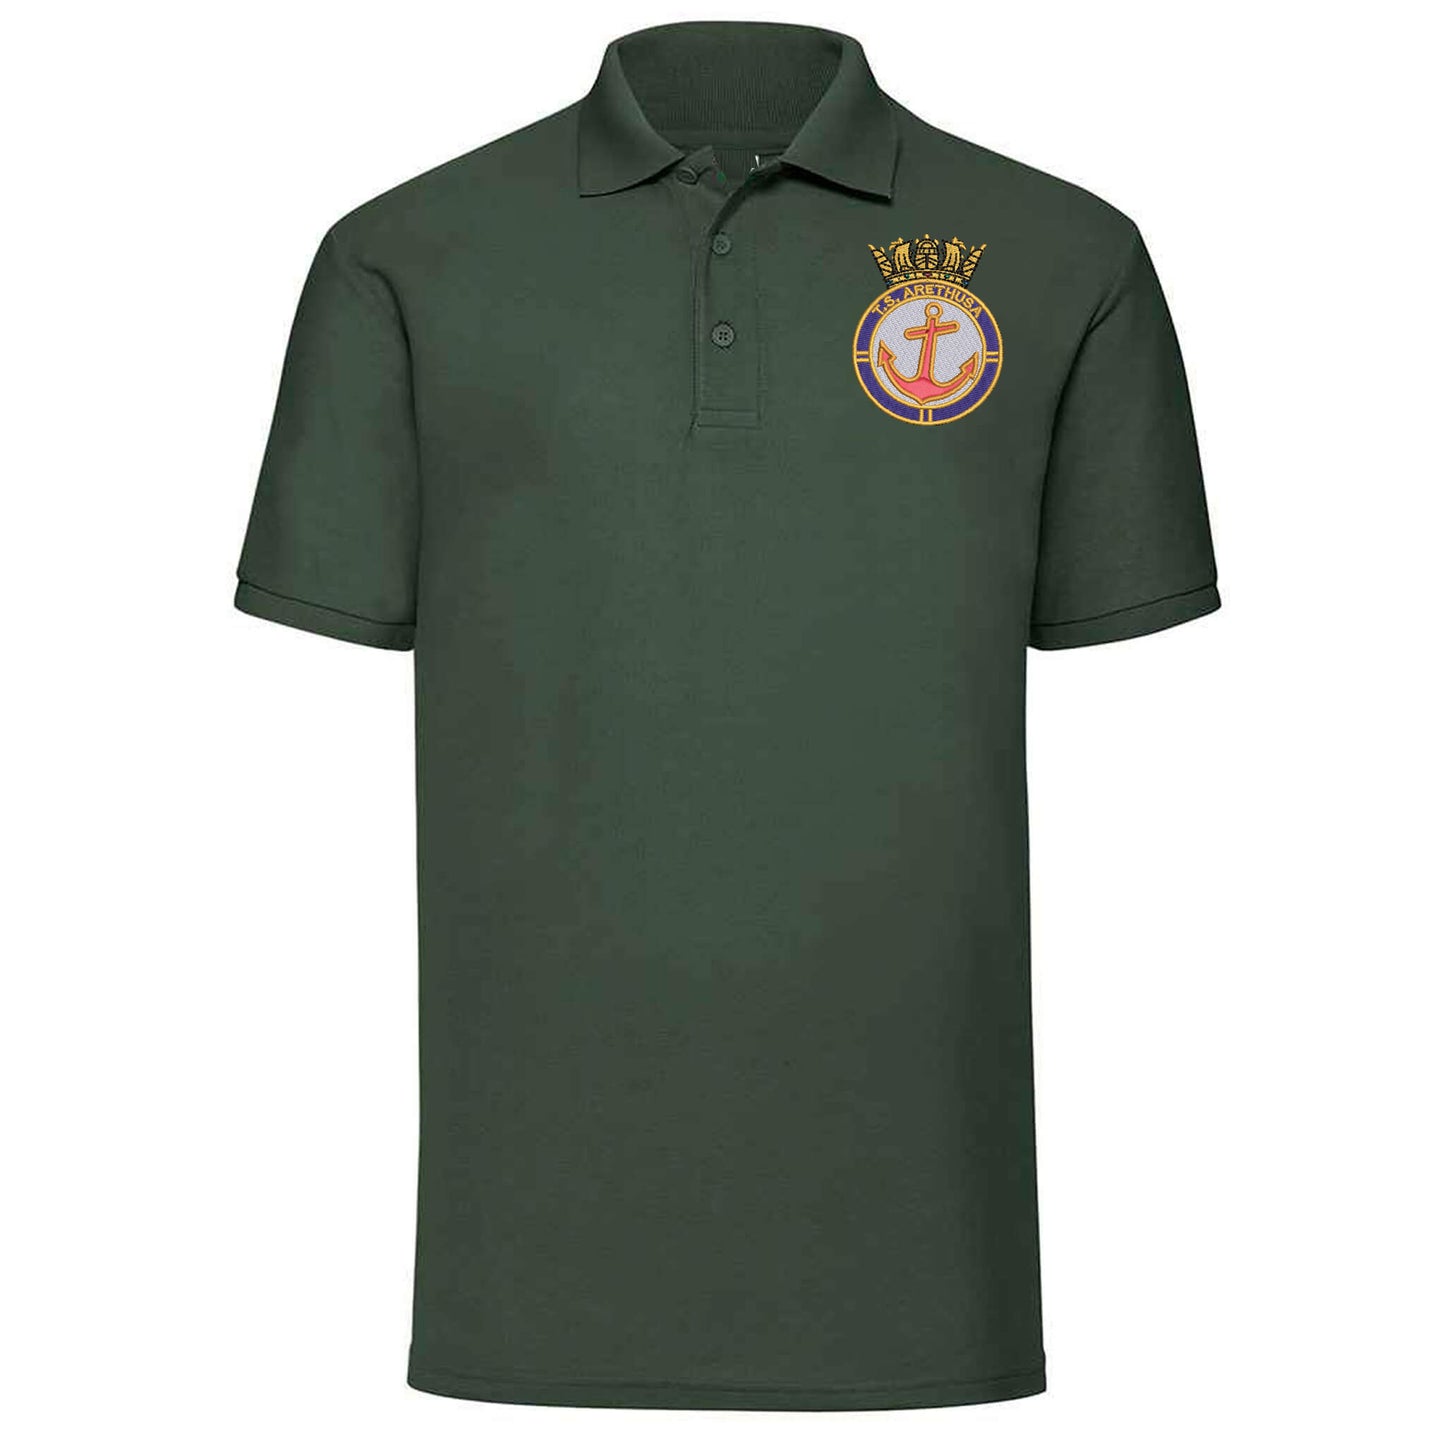 TS. Arethusa Association Polo Shirt